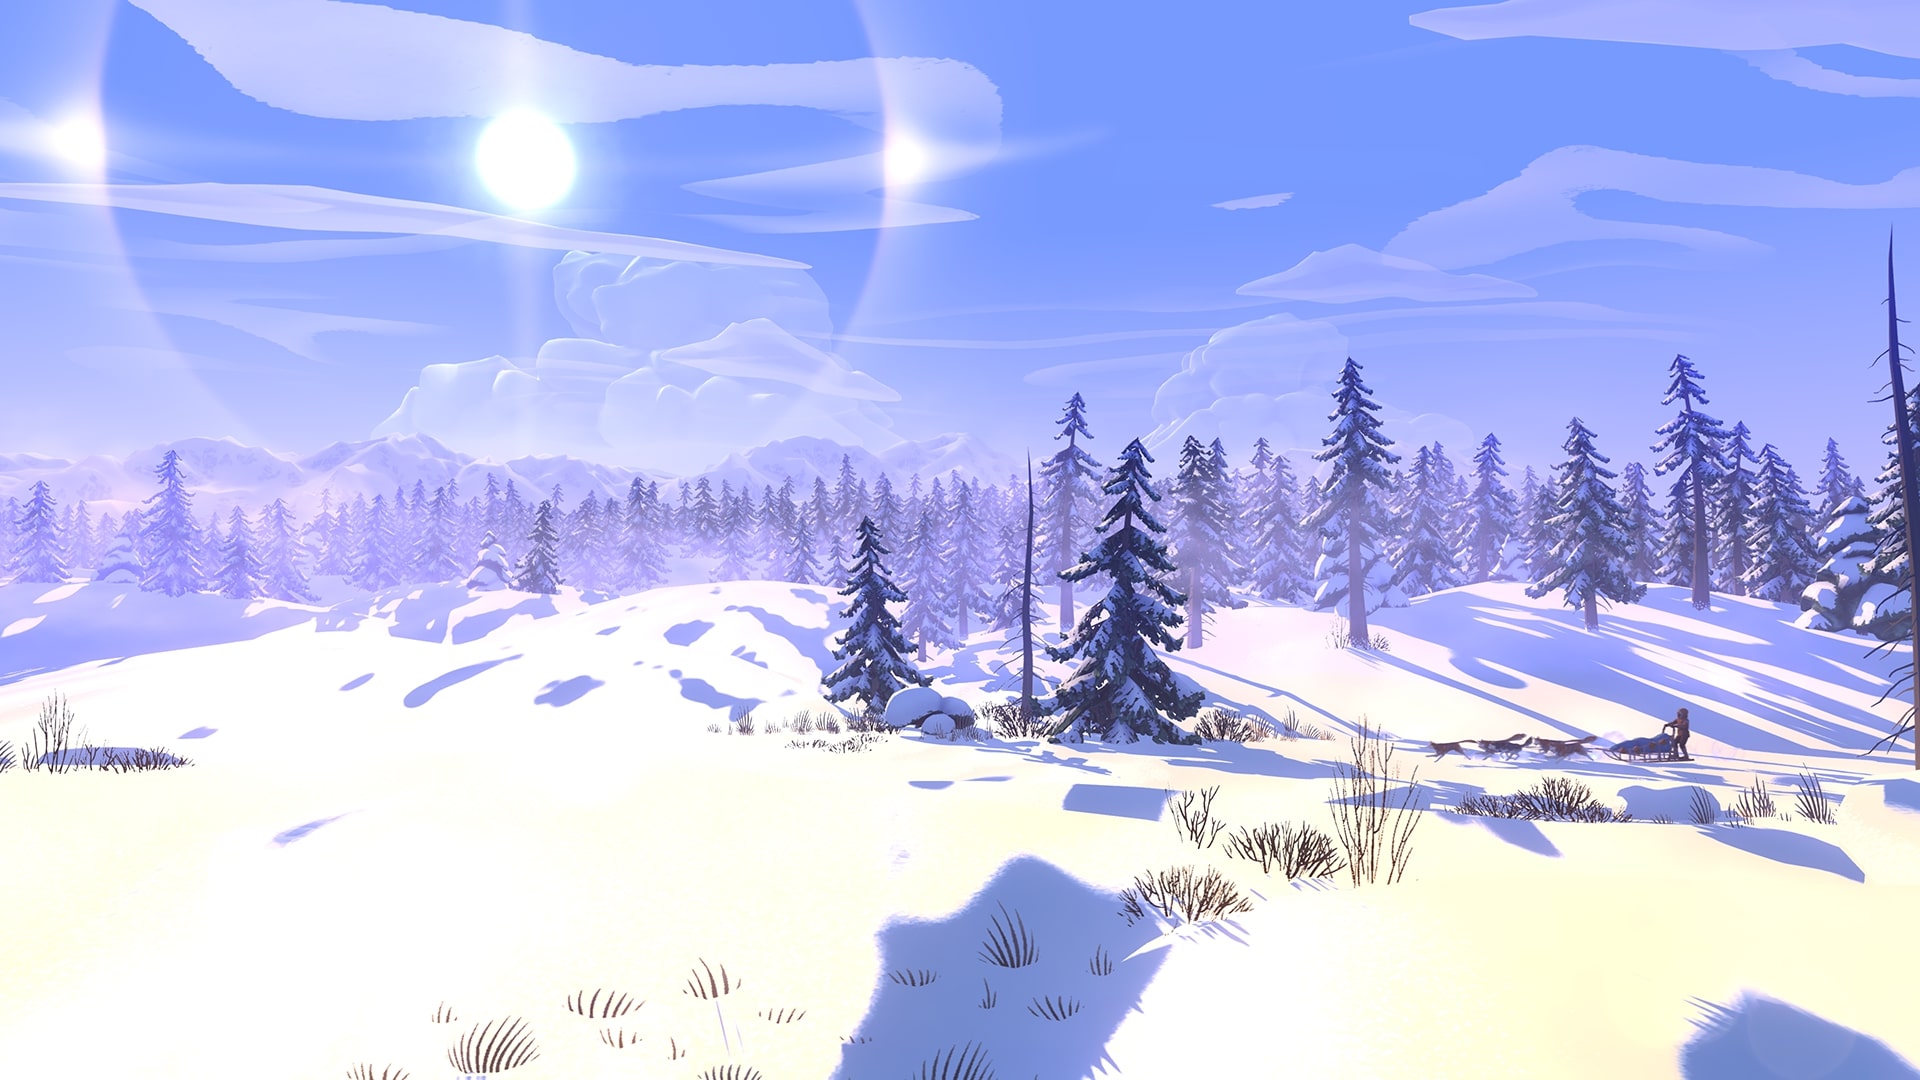 The red lantern screenshot paysage neige